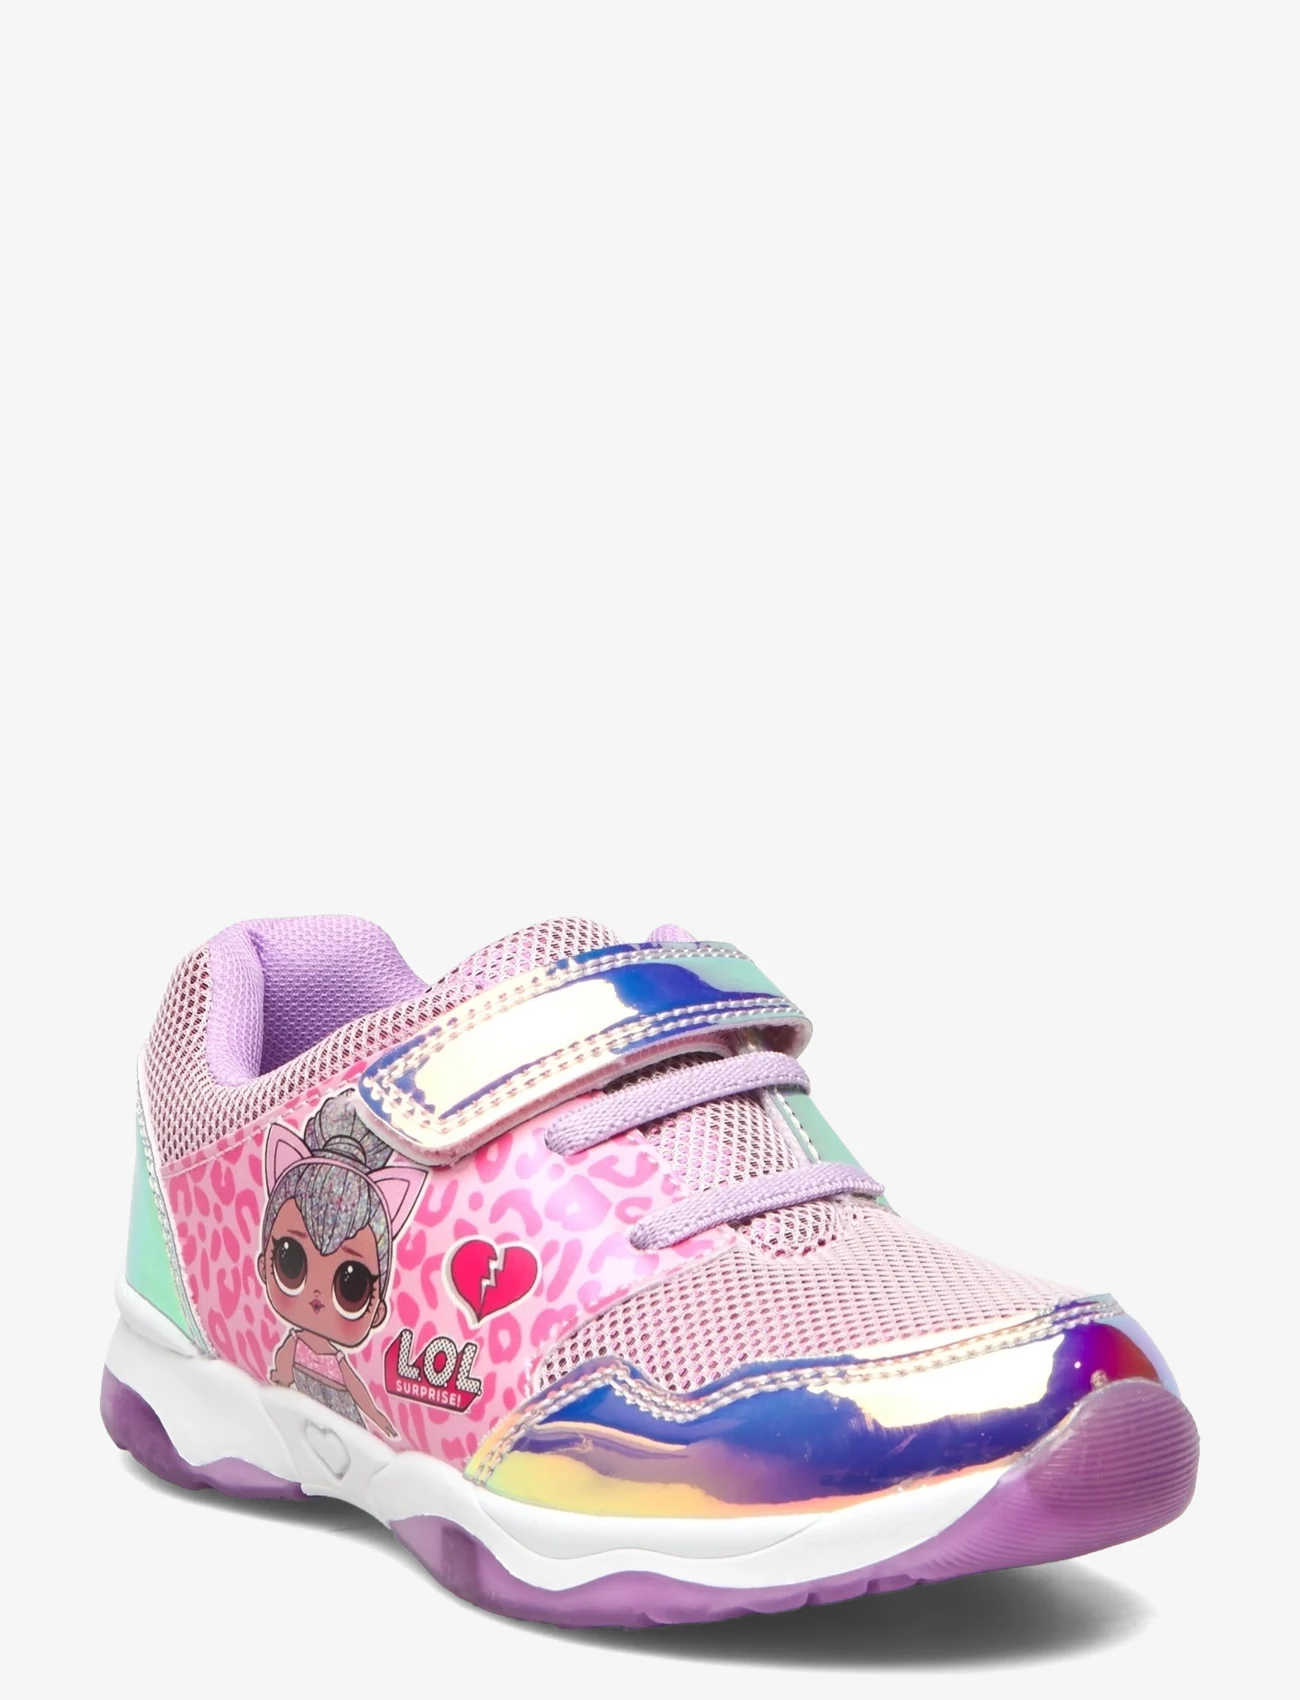 Leomil - Girls sneakers - kesälöytöjä - pink/lilac - 0